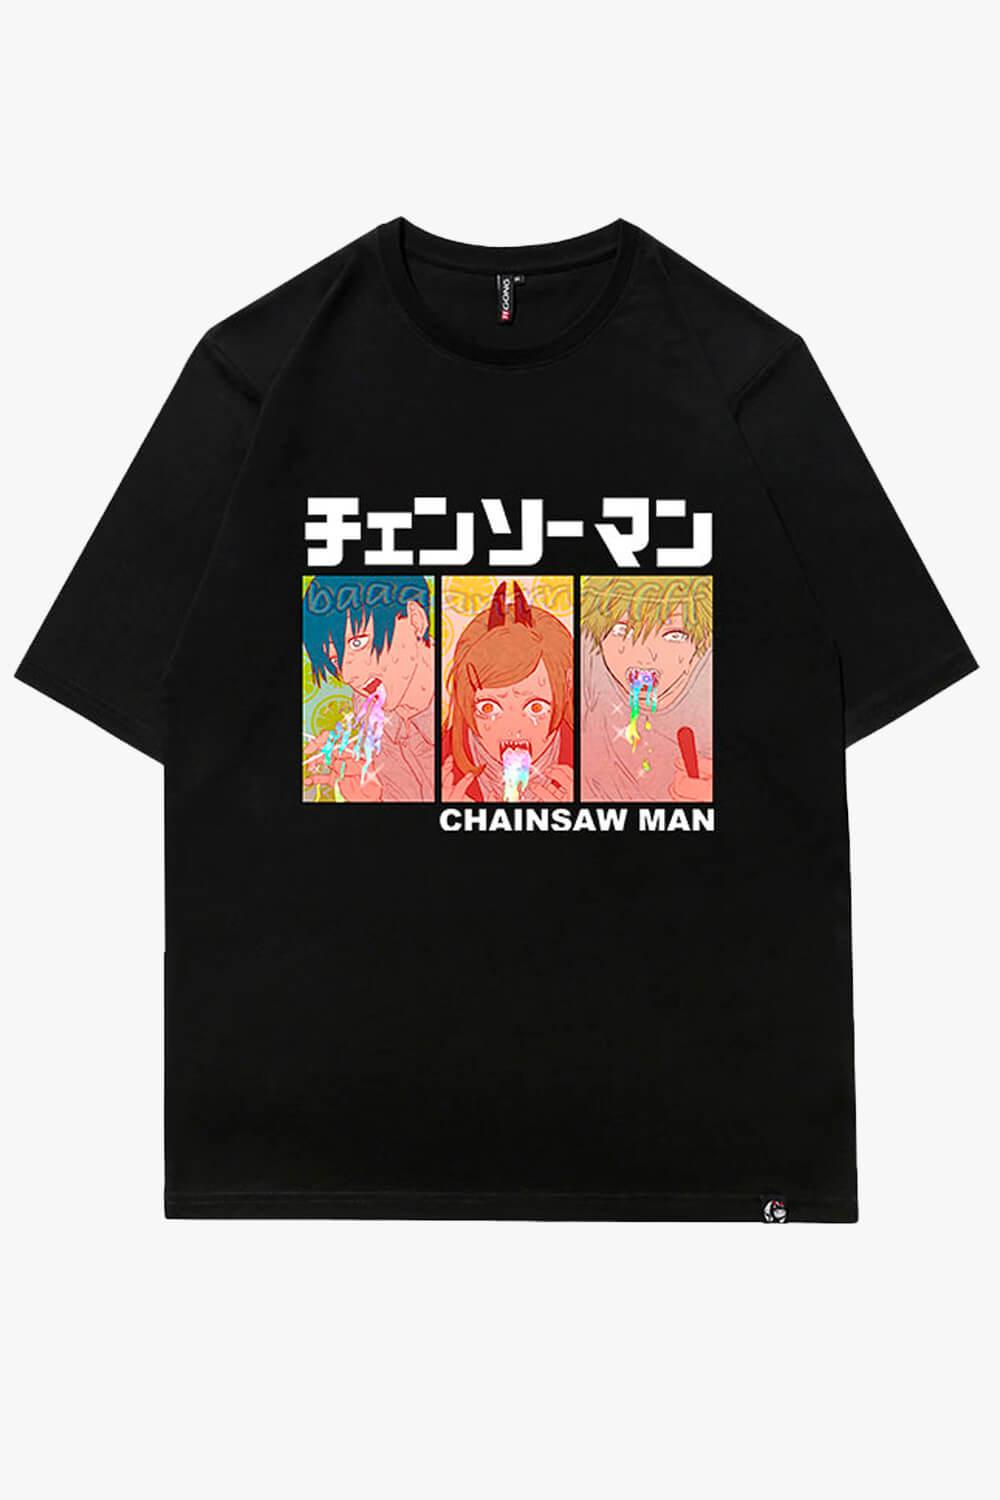 Chainsaw Man Barf Manga T-Shirt - Aesthetic Clothes Shop